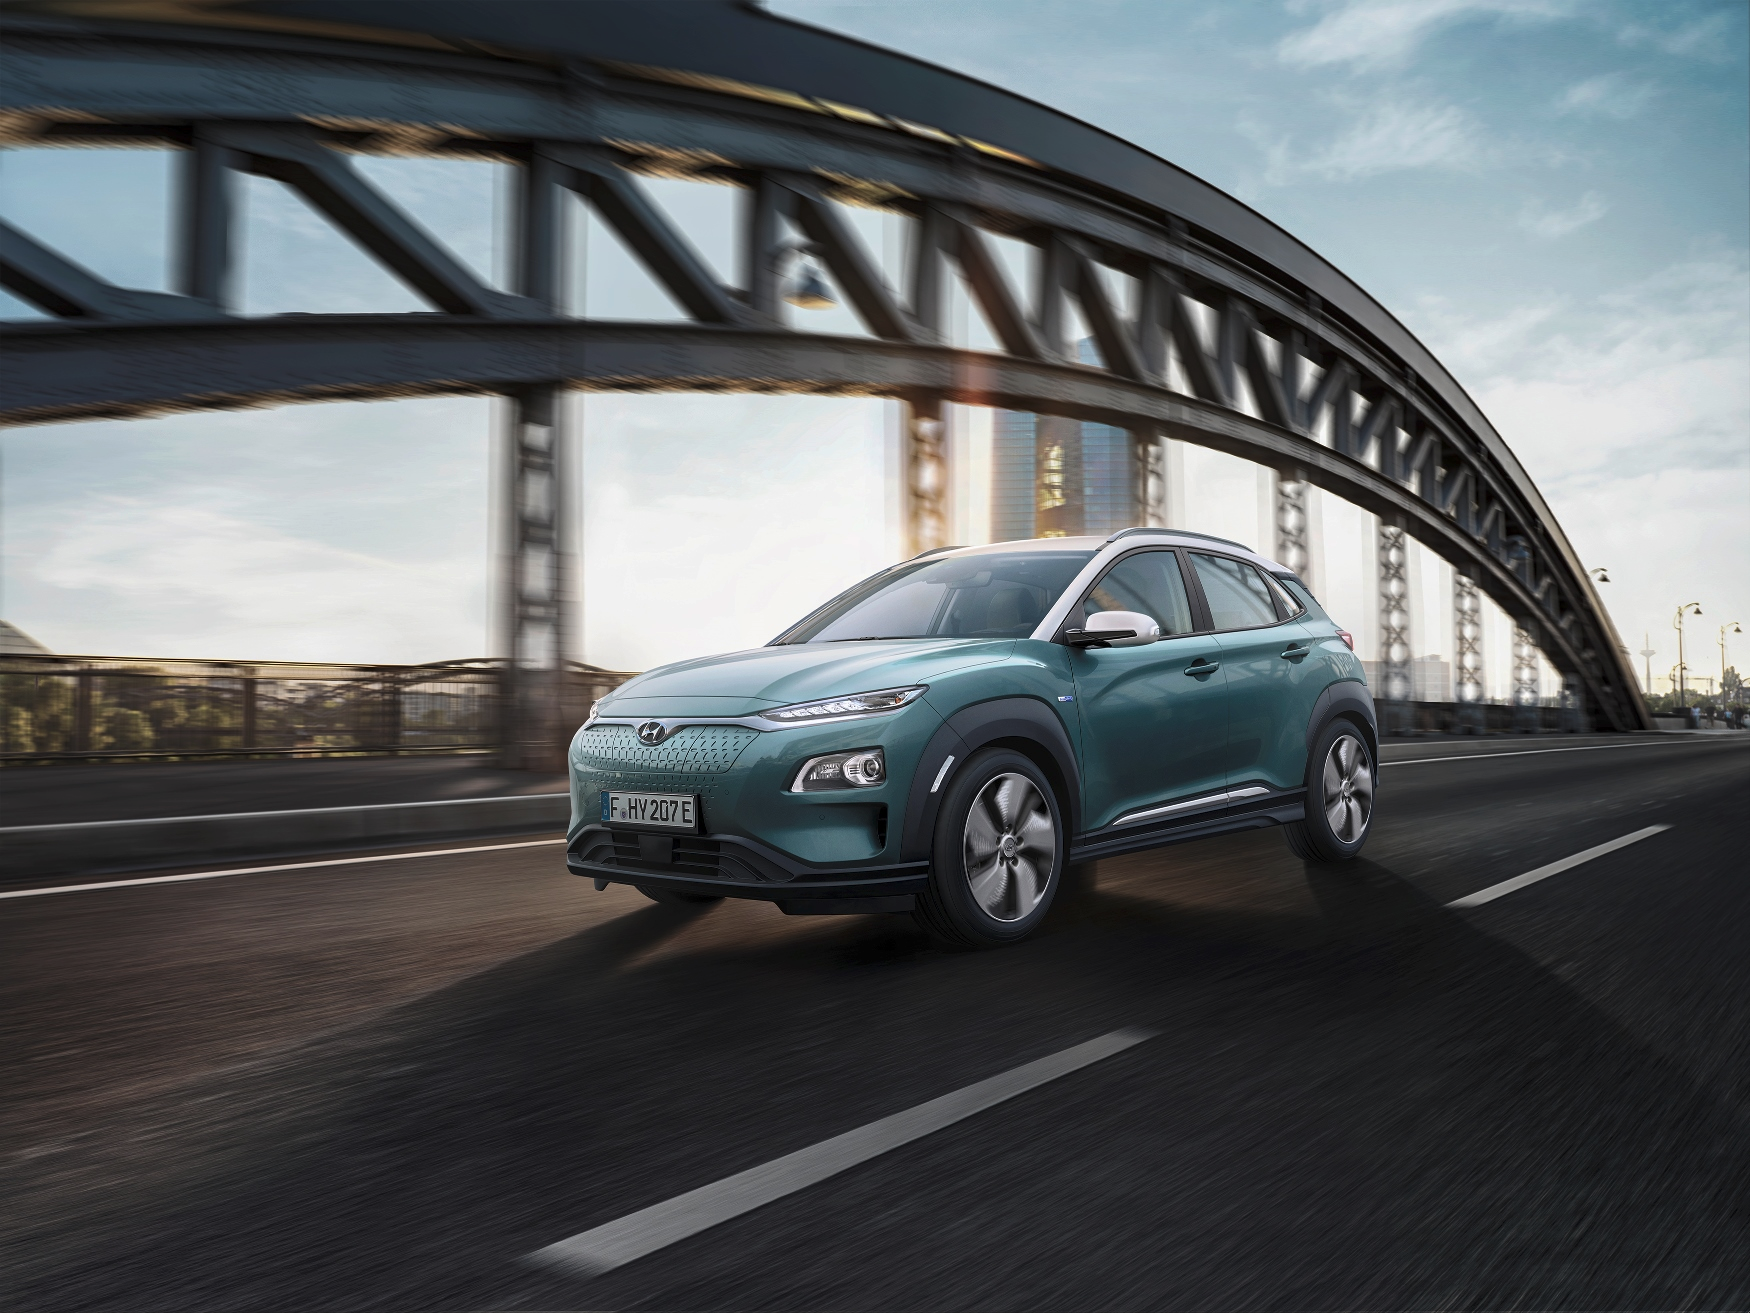  2020 Hyundai Kona Electric अब फुल चार्जिंग पर चलेगी 484 किलोमीटर